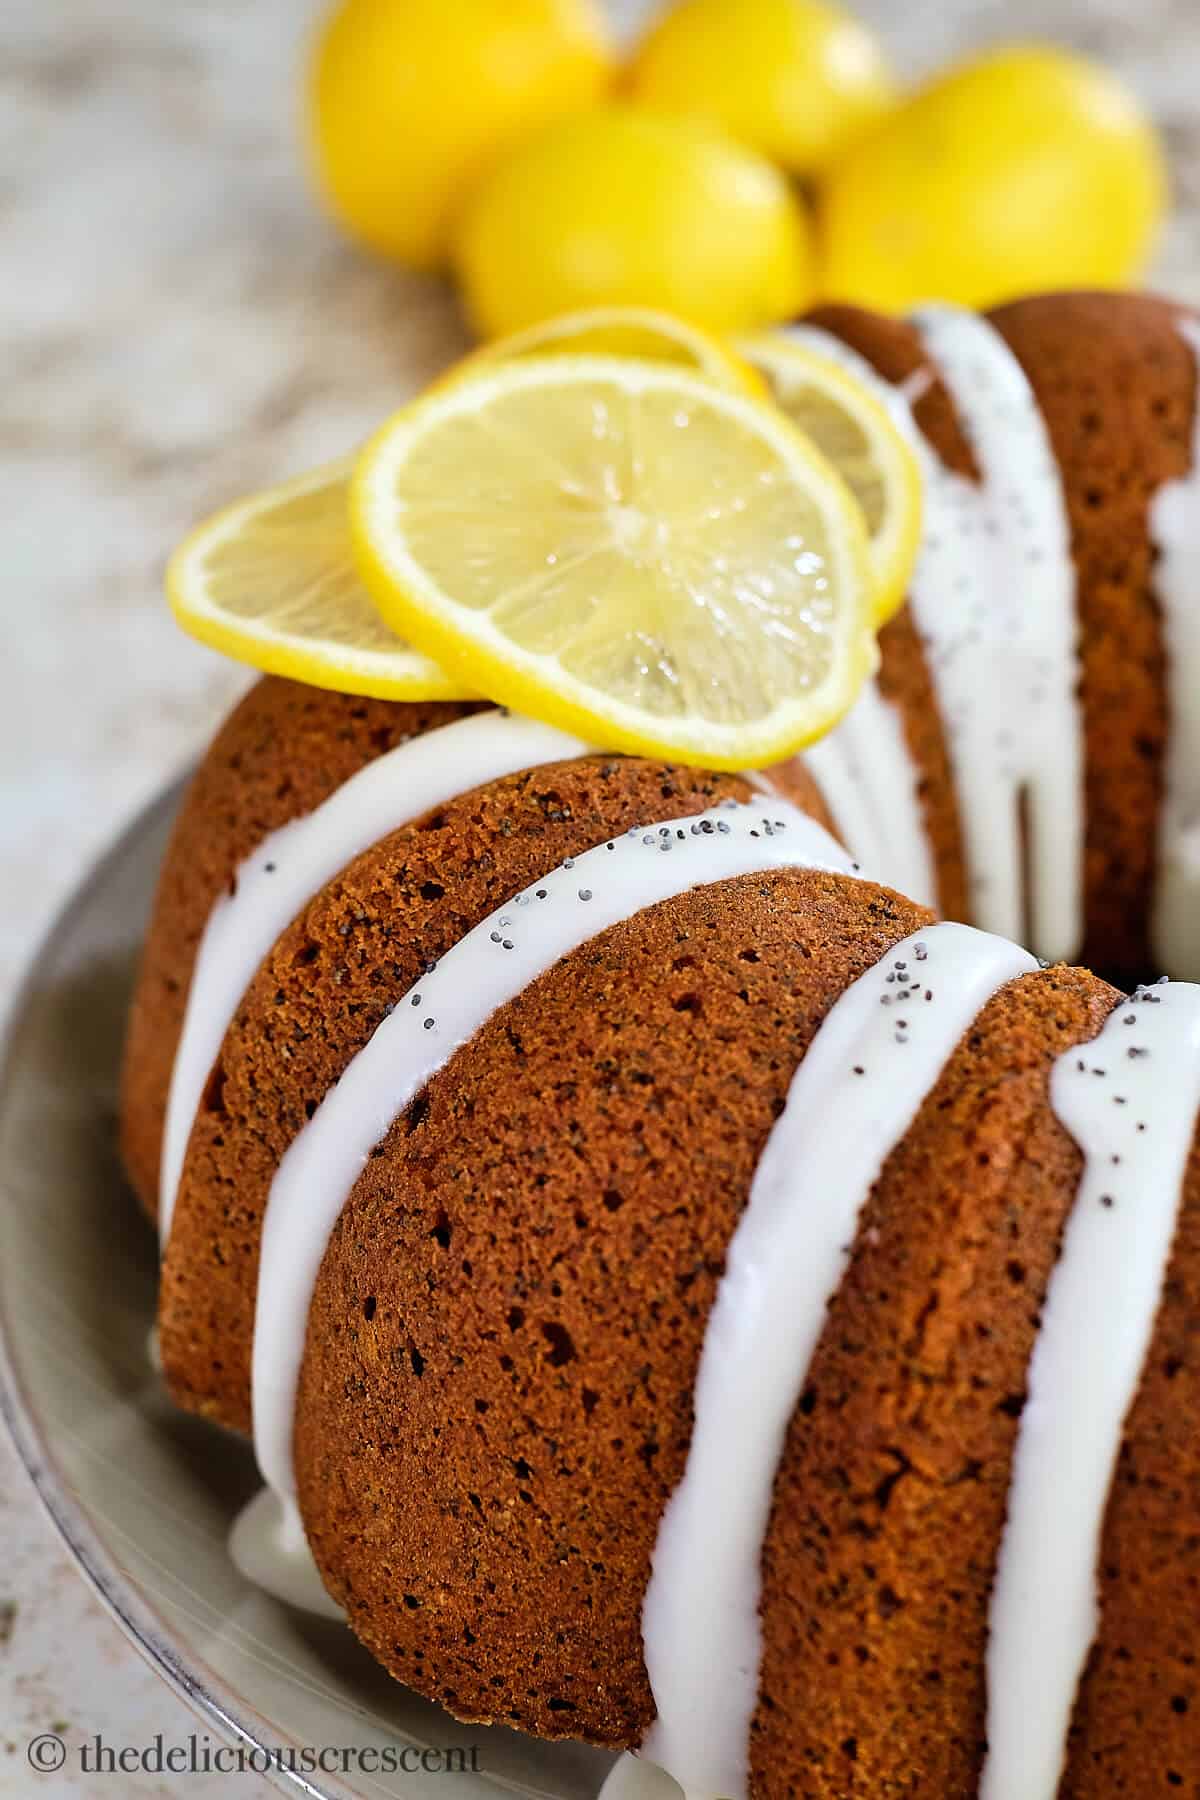 Lemon slices arranged on top of the bundt cake.